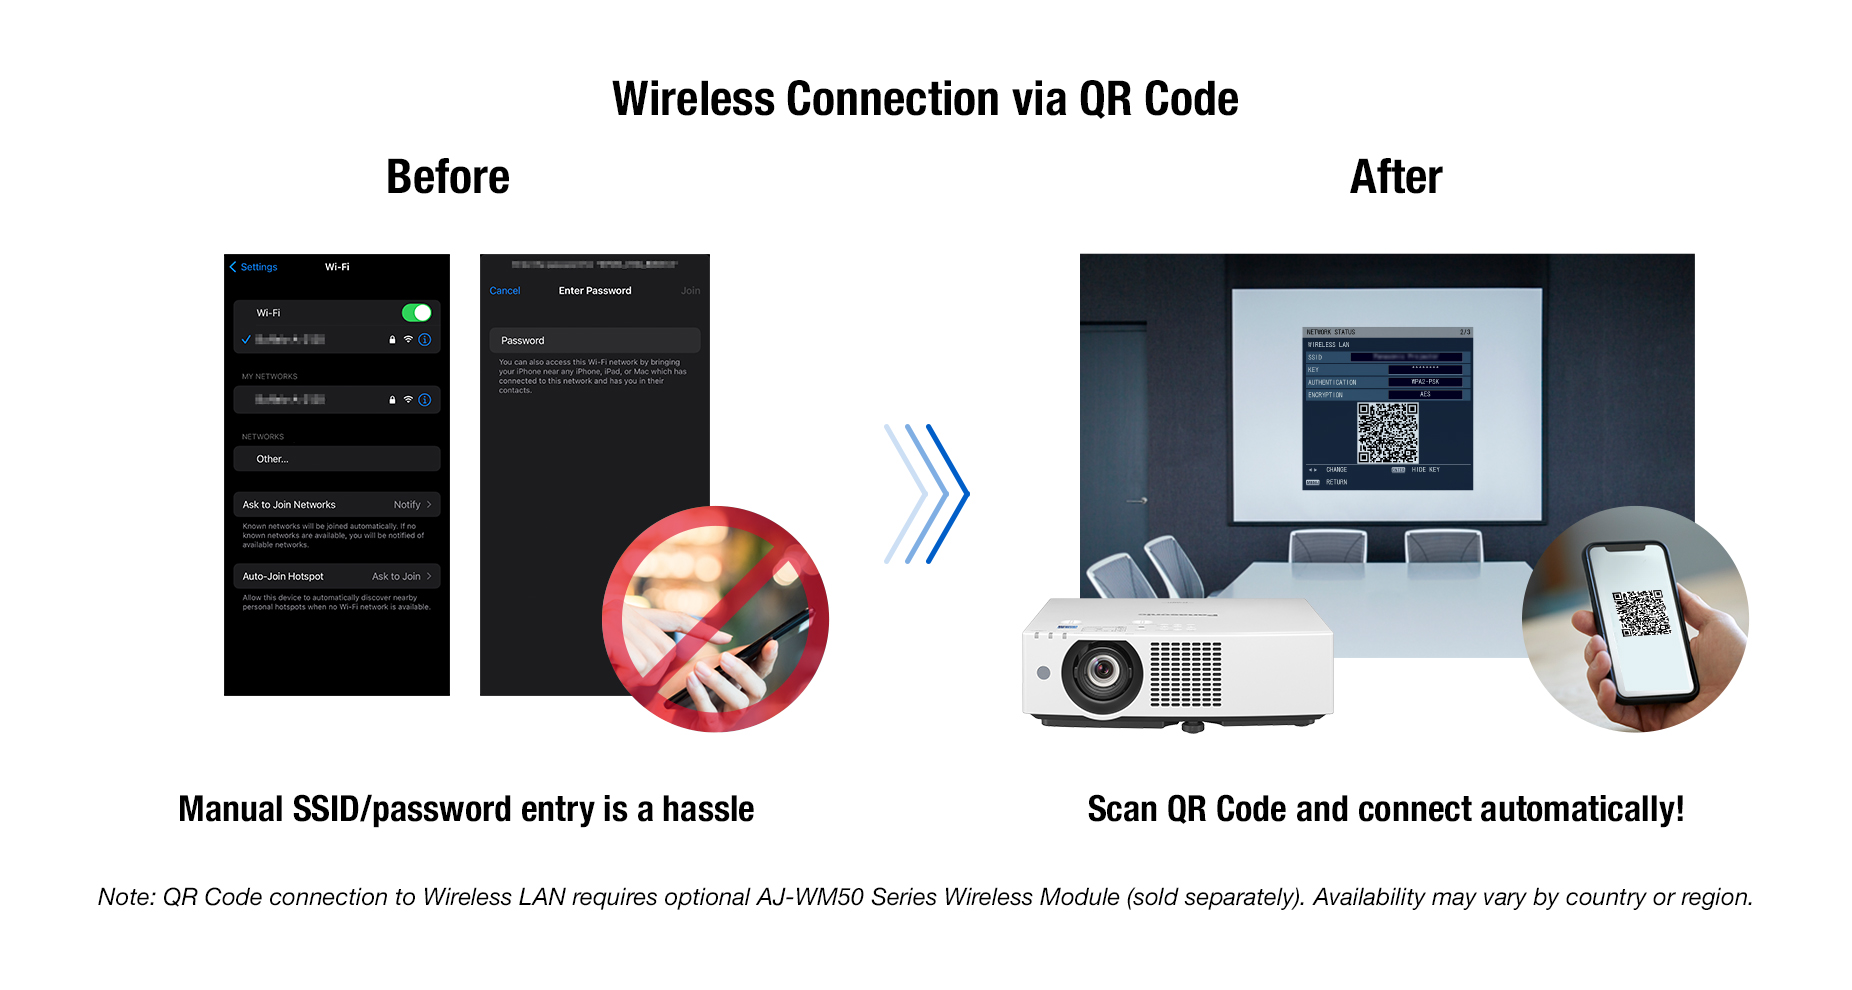 Wirelss Connection via QR Code